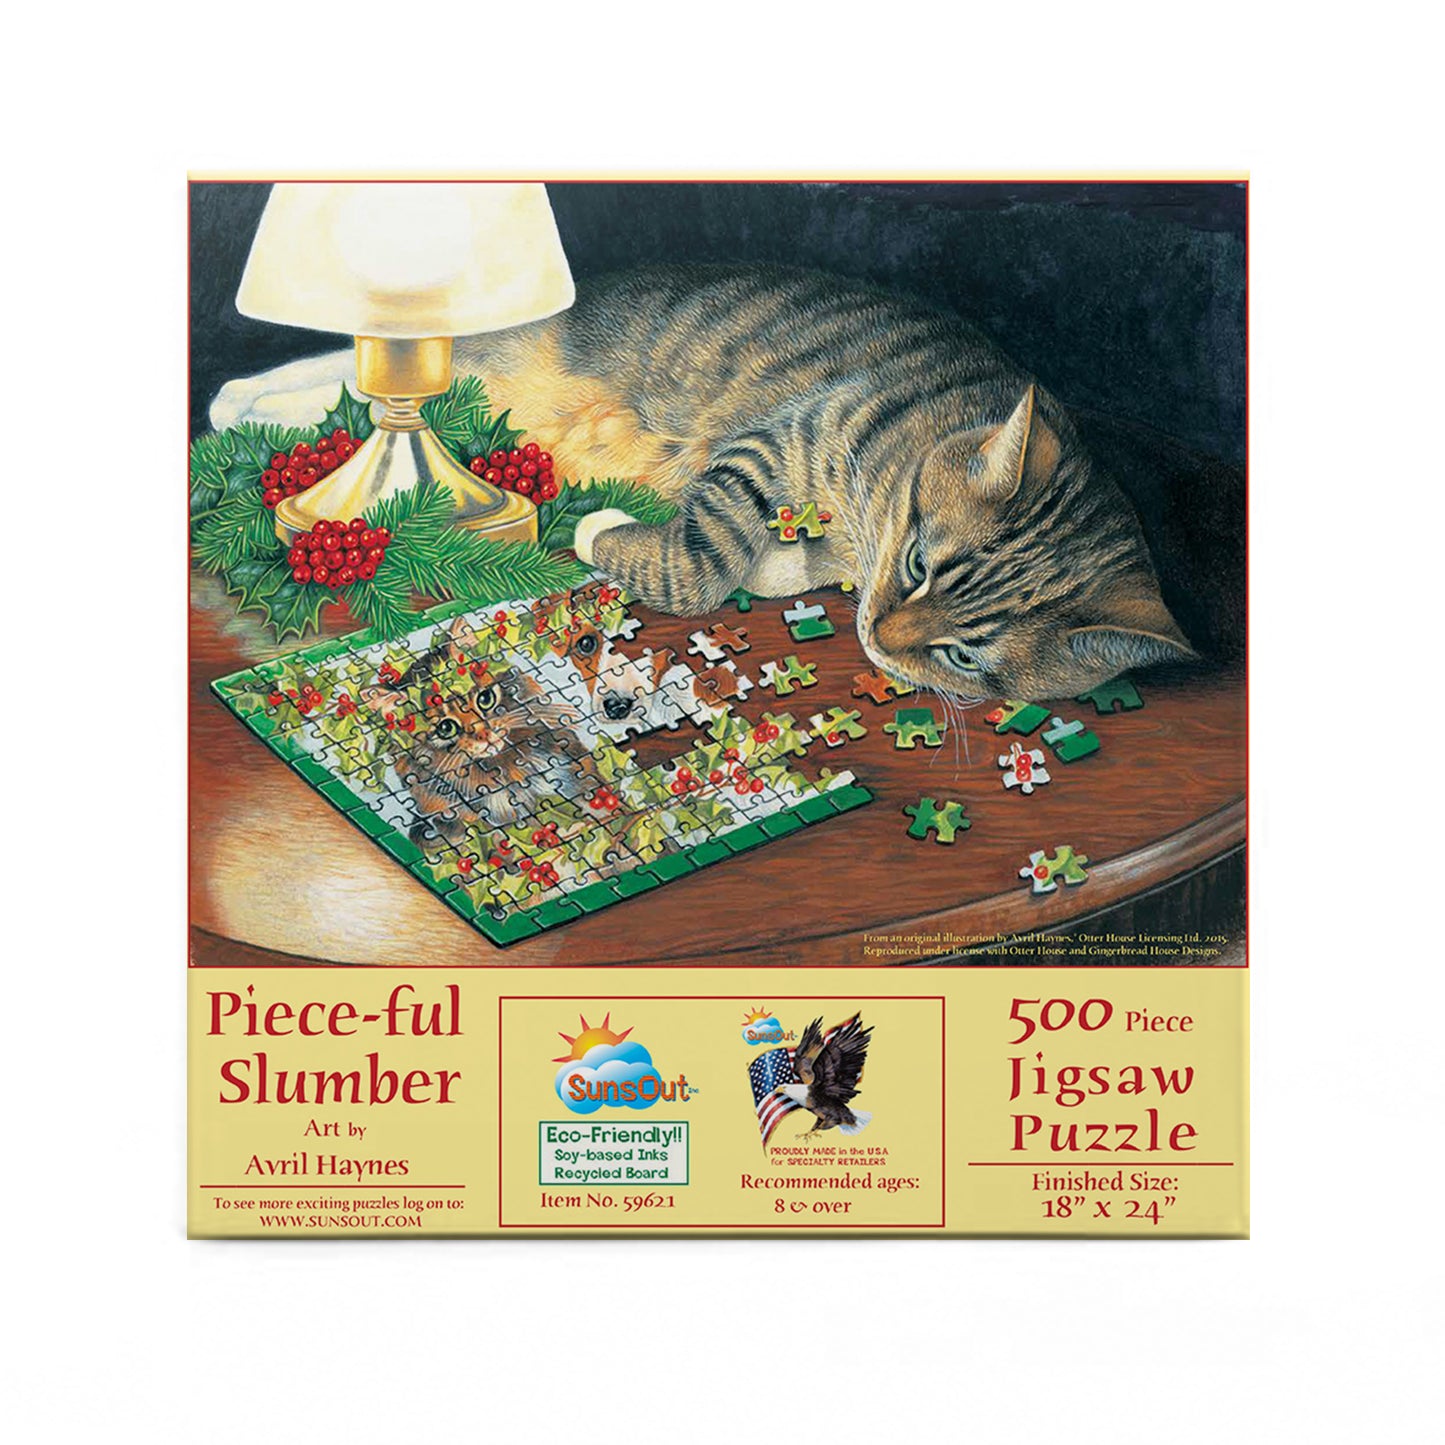 Piece-ful Slumber - 500 Piece Jigsaw Puzzle